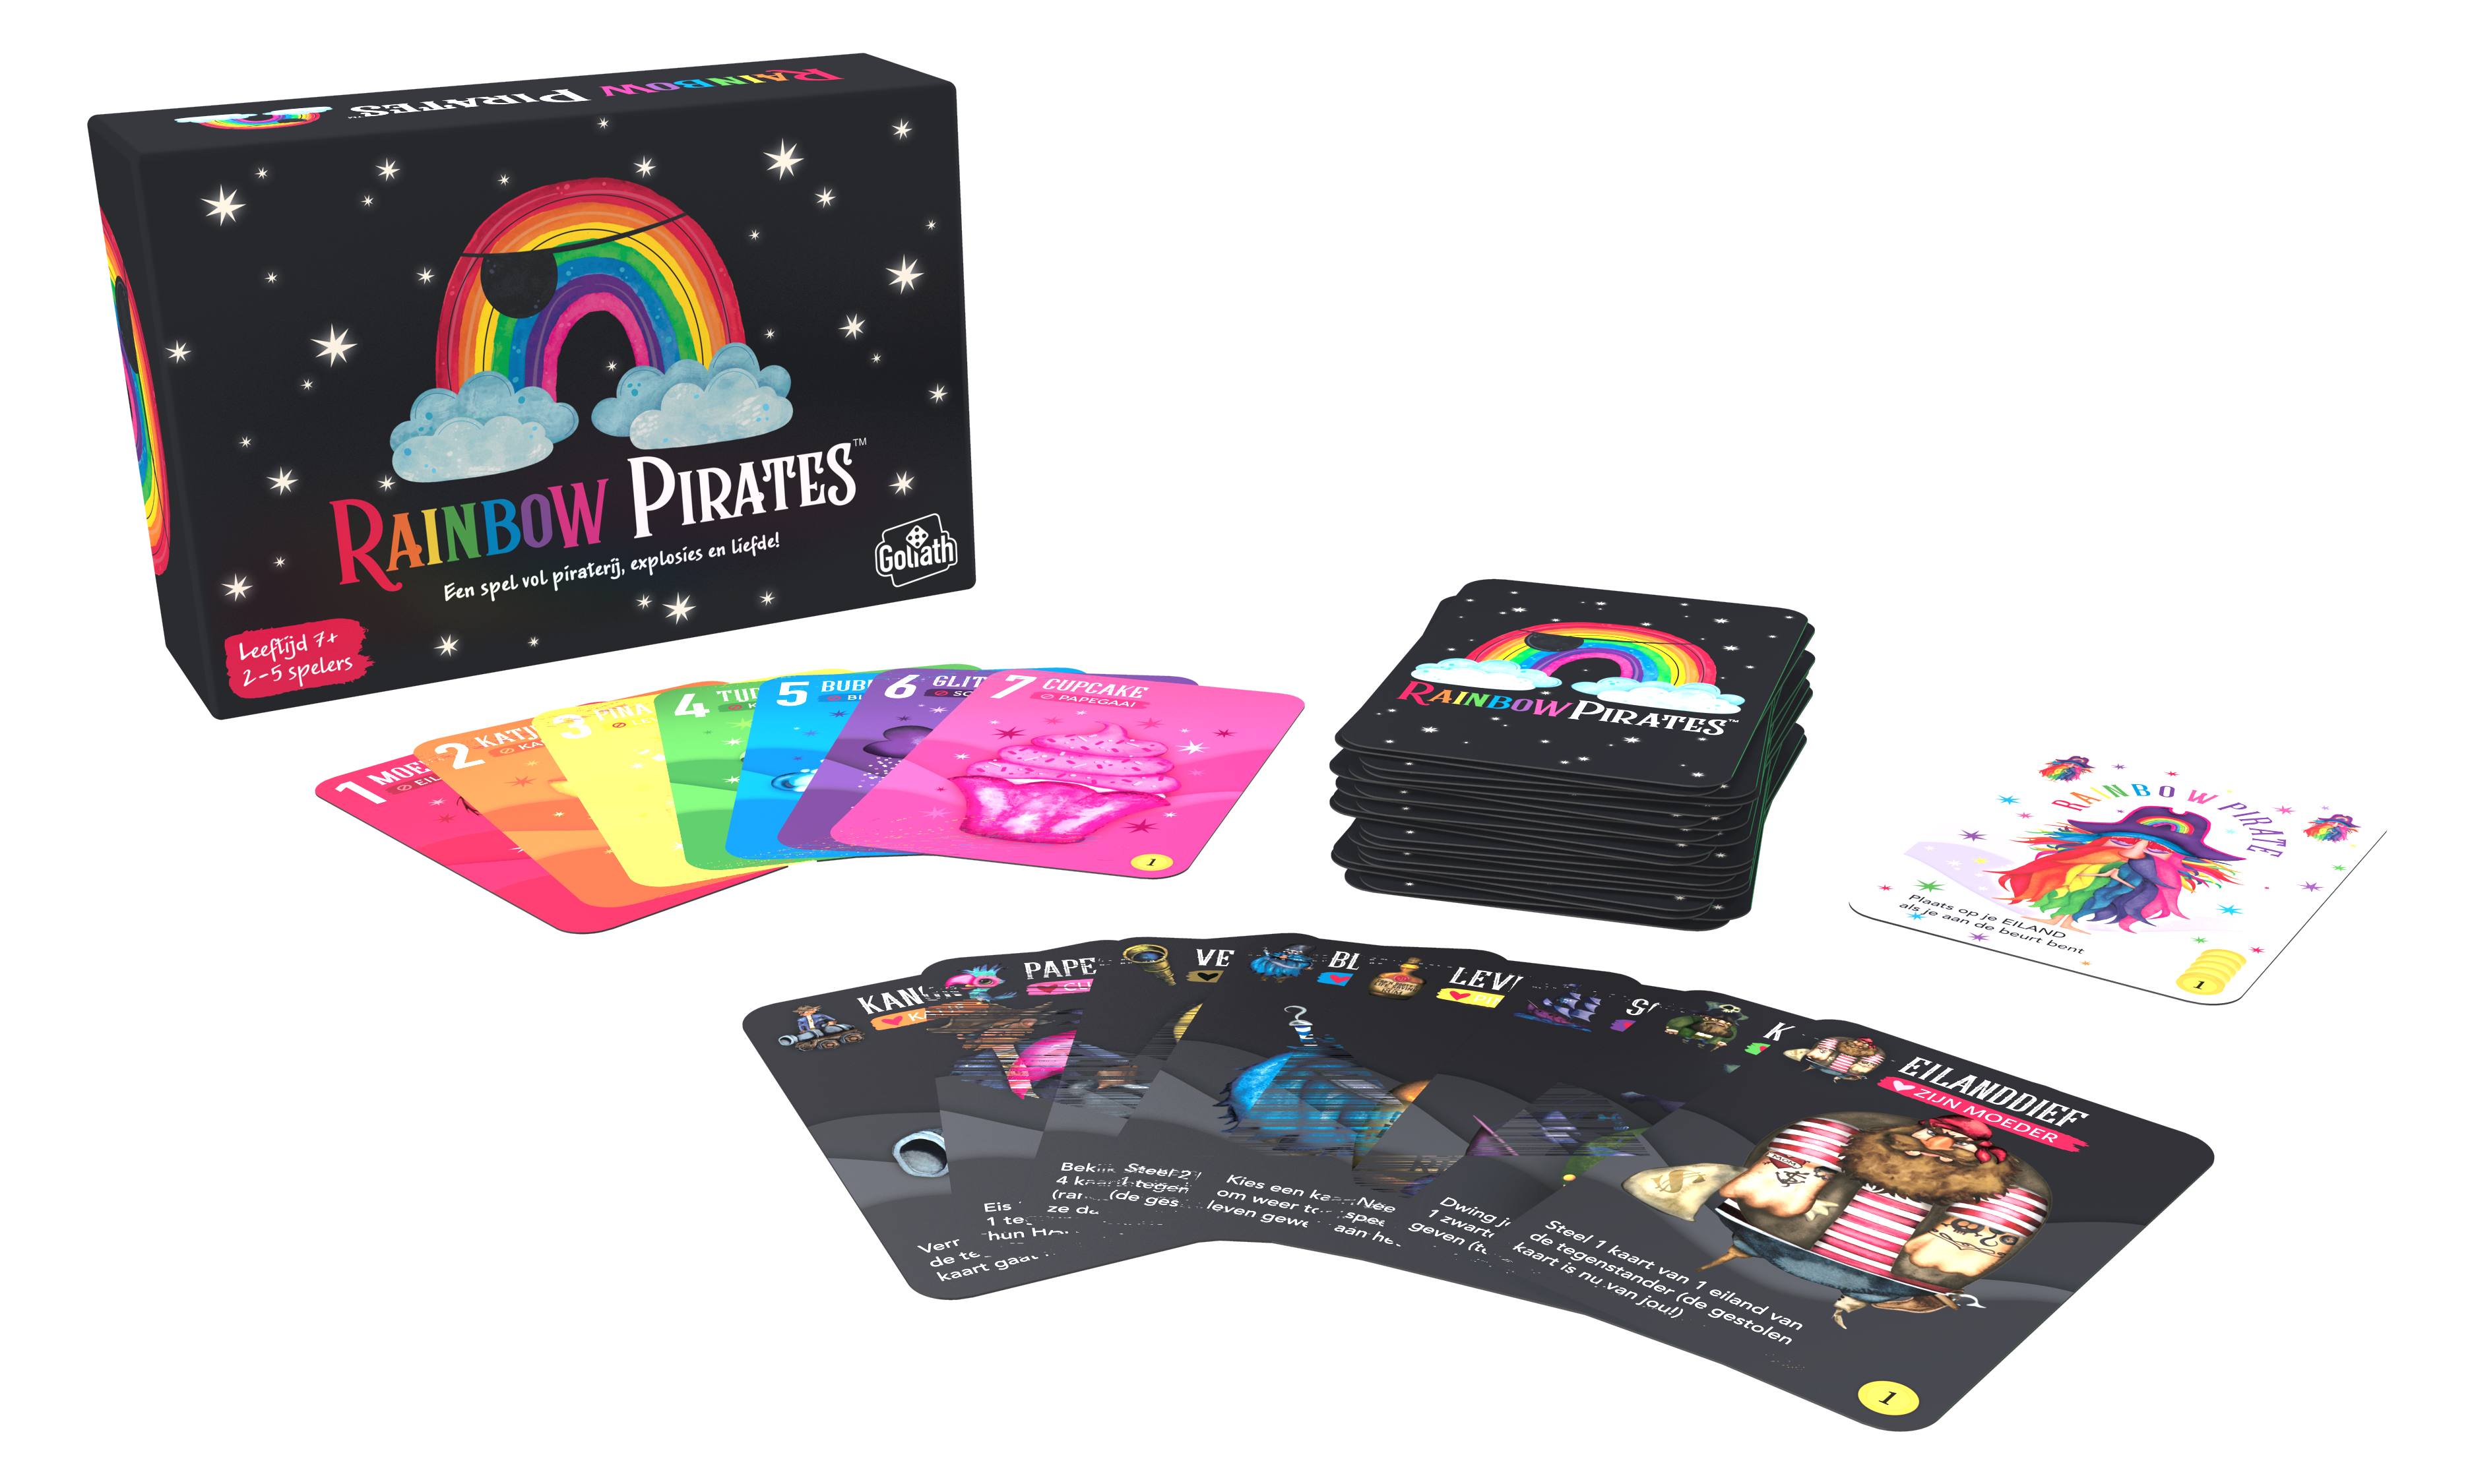 Rainbow Pirates - NL